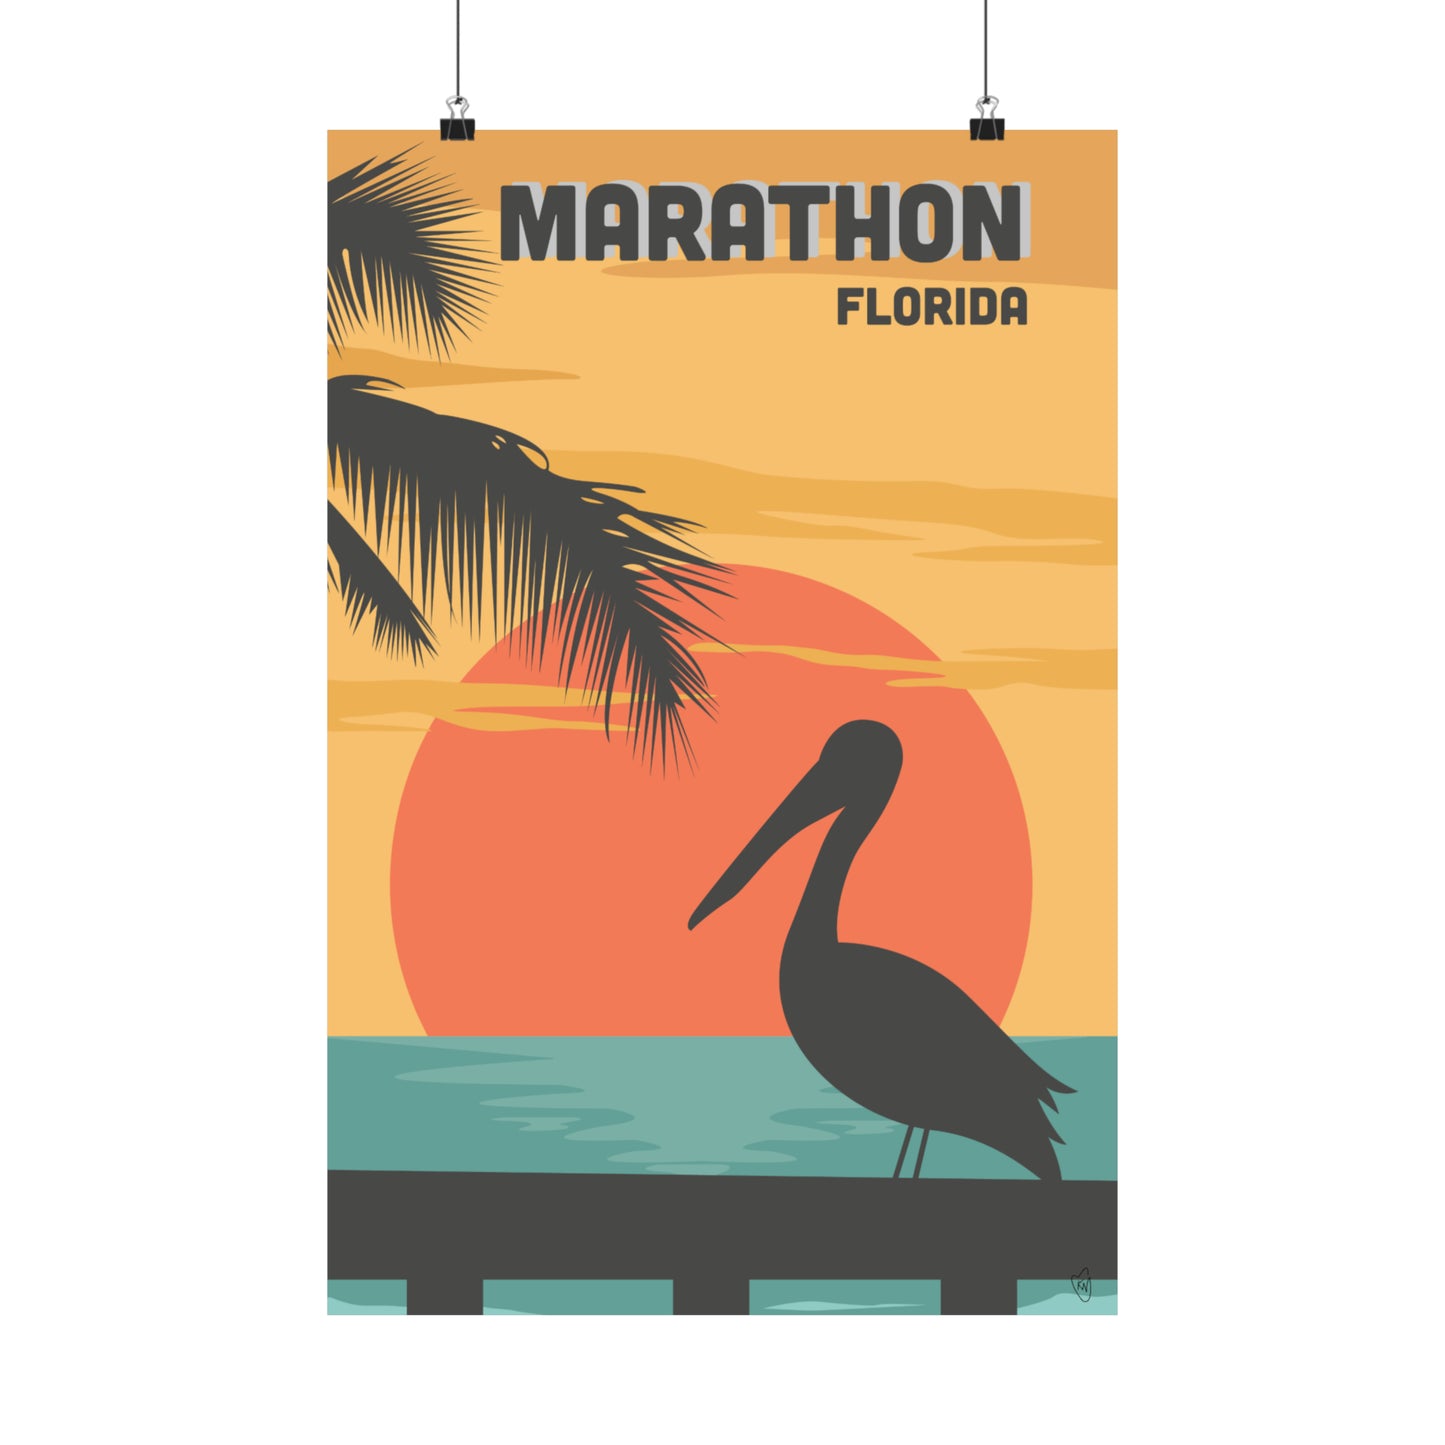 Pelican Florida keys poster - Florida keys art - marathon Florida